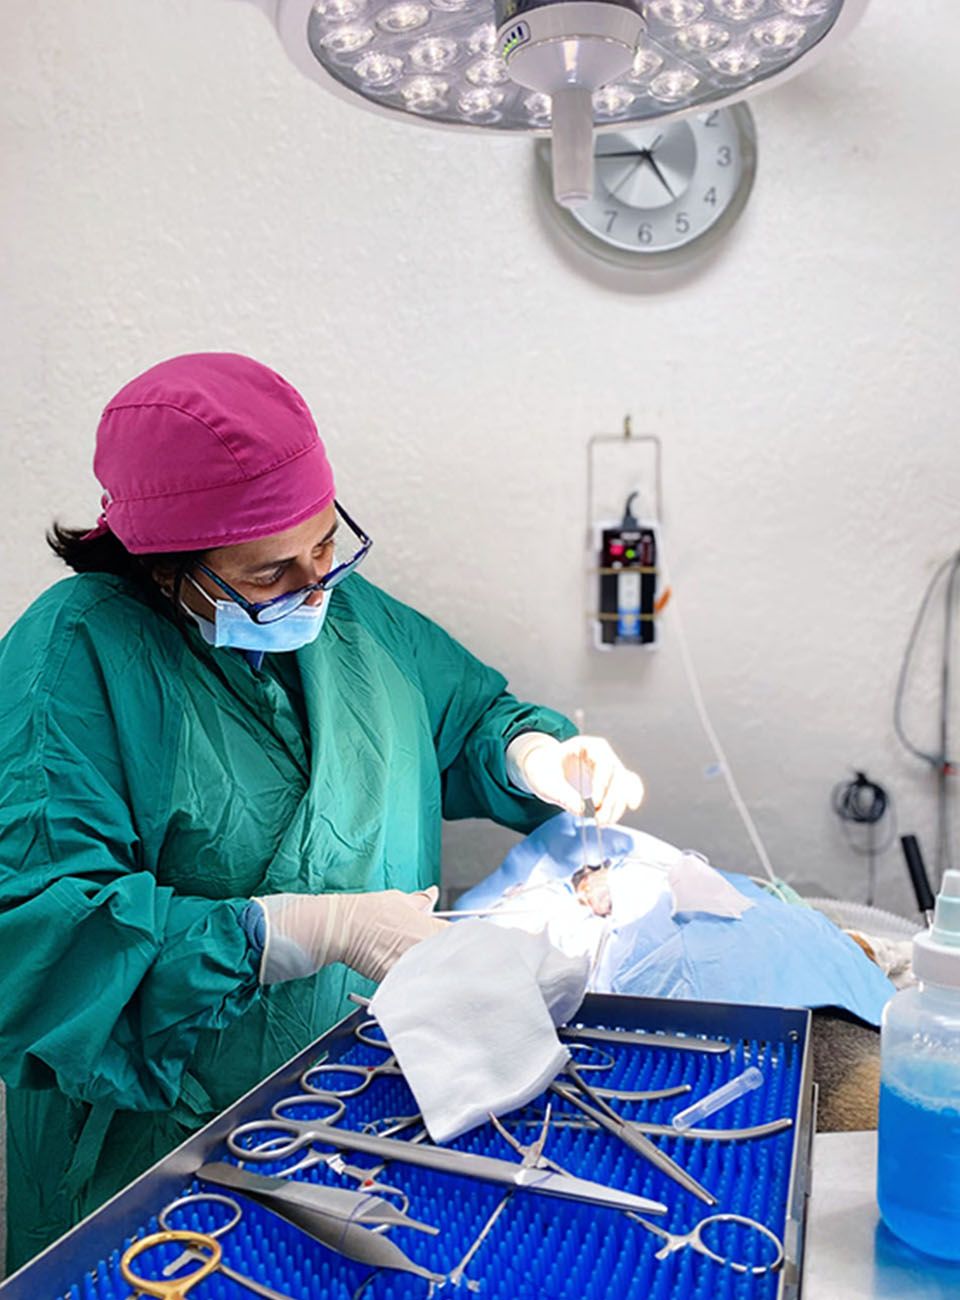 mass removal surgery